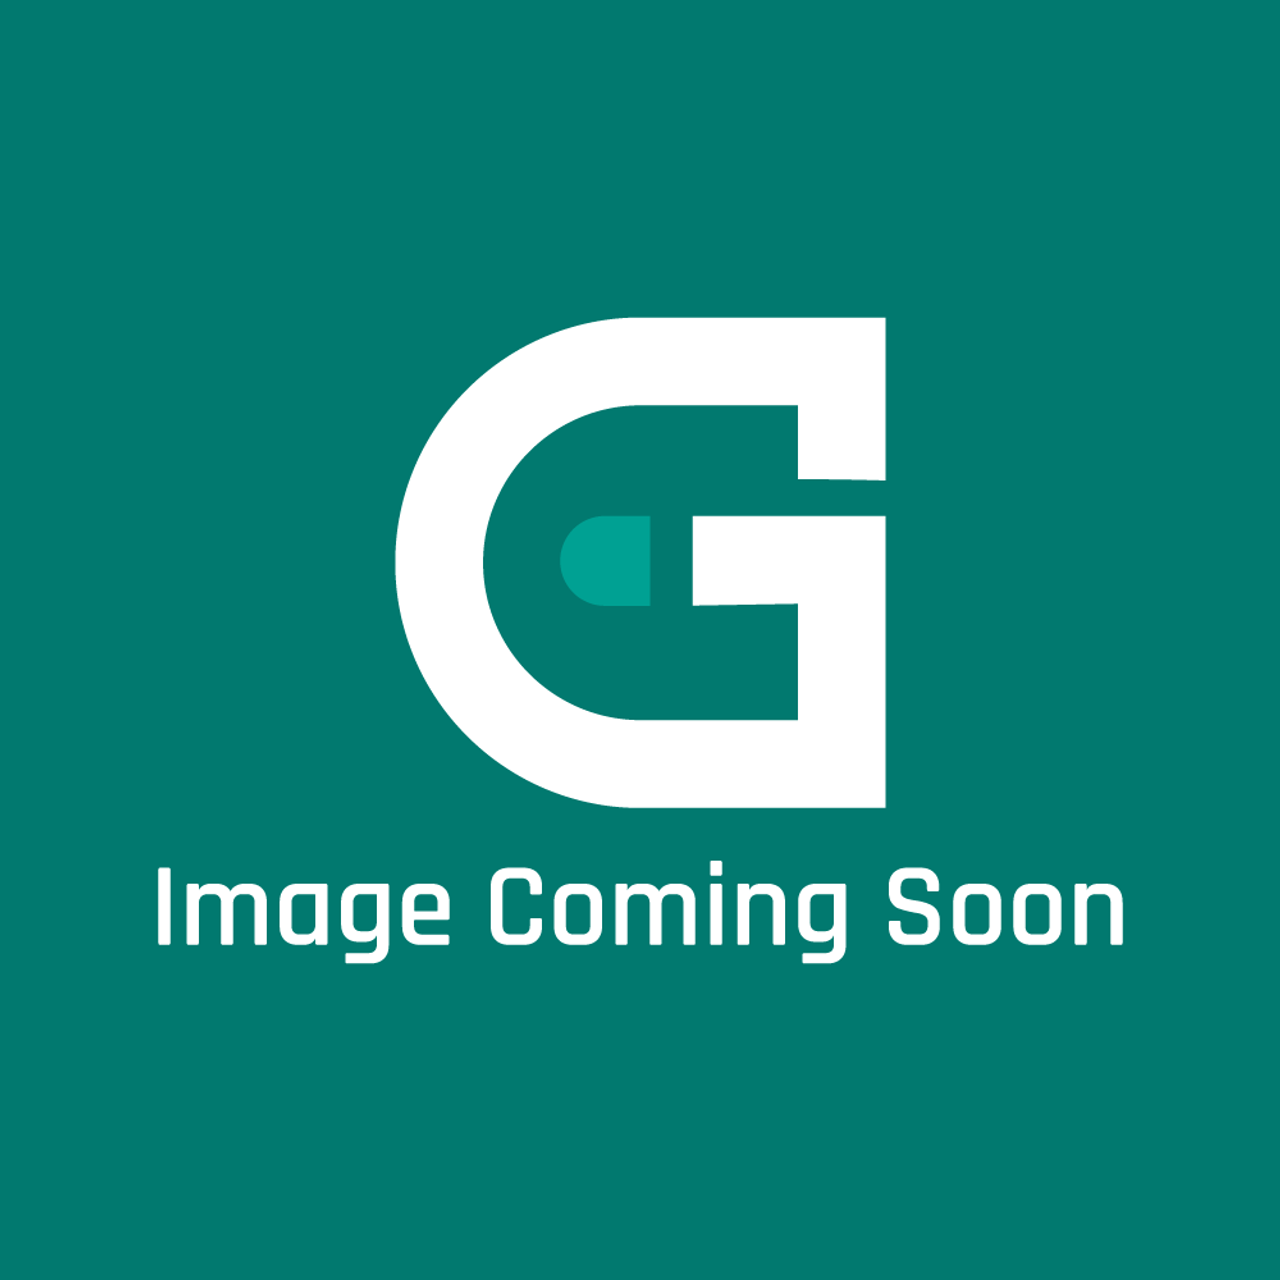 Frigidaire - Electrolux 316453033 Dsp Glassassem. - Image Coming Soon!